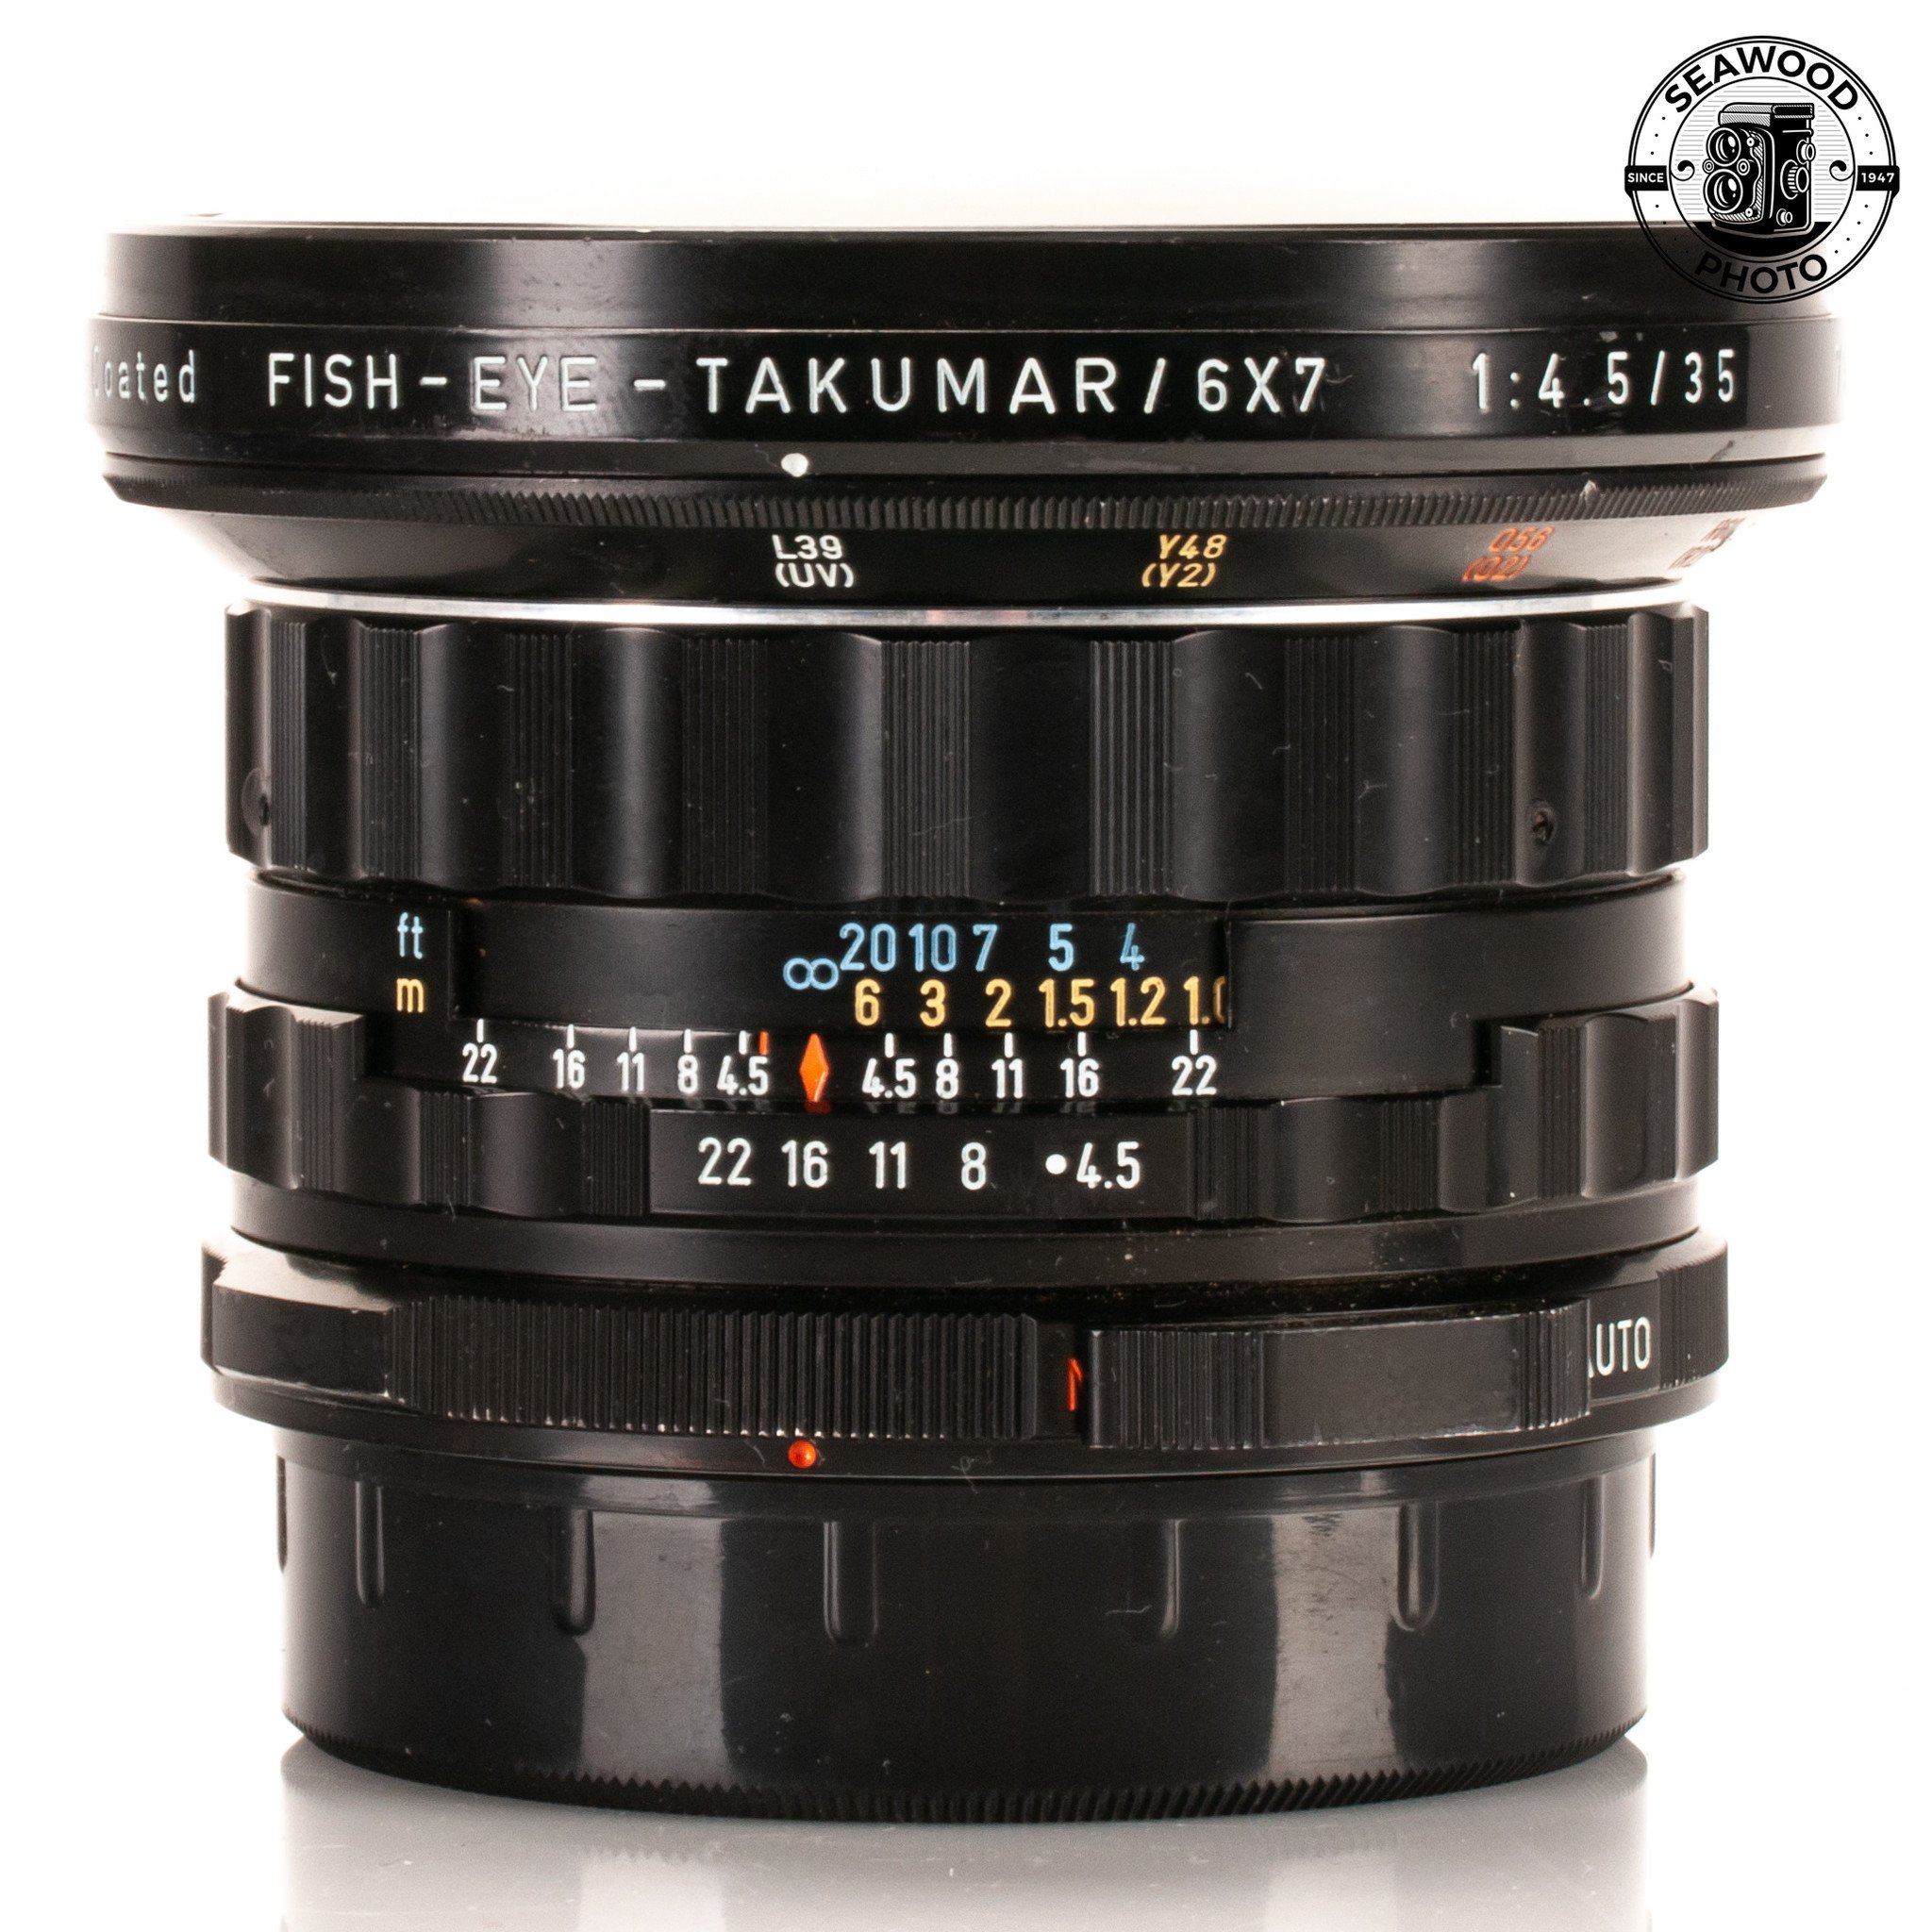 PENTAX FISH-EYE-TAKUMAR 6x7  35mm F4.5